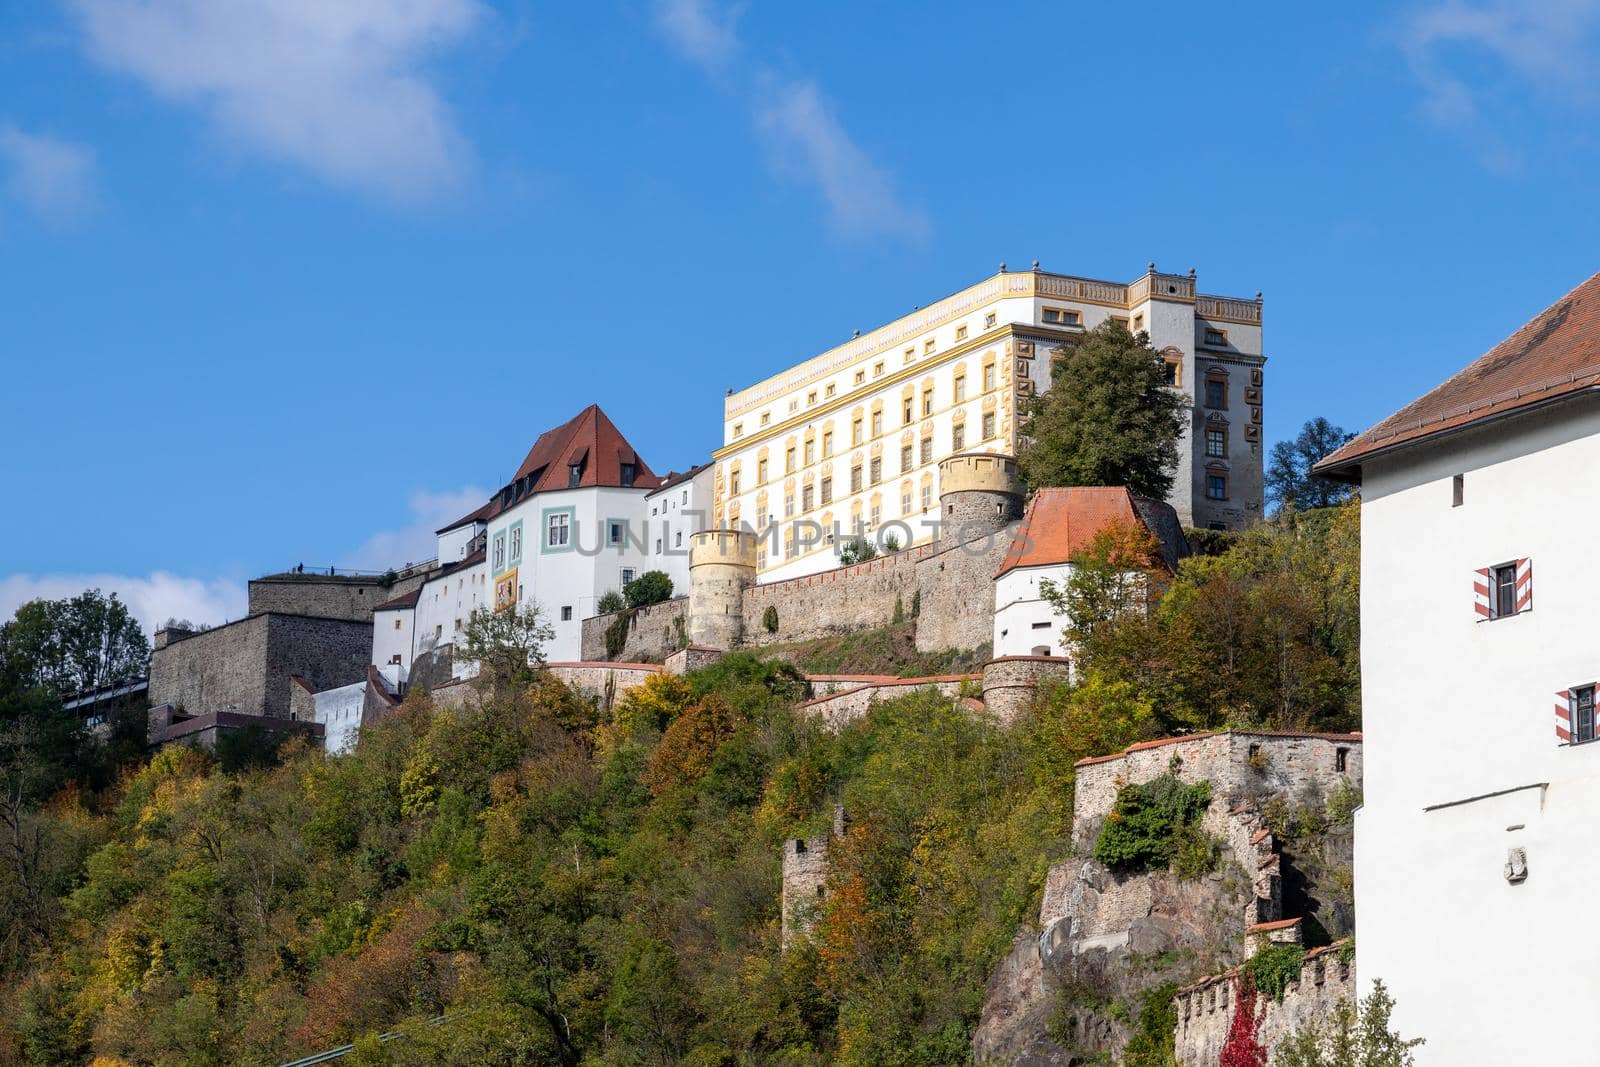 Fortress Veste Oberhaus in Passau, Bavaria, Germany in autumn by reinerc